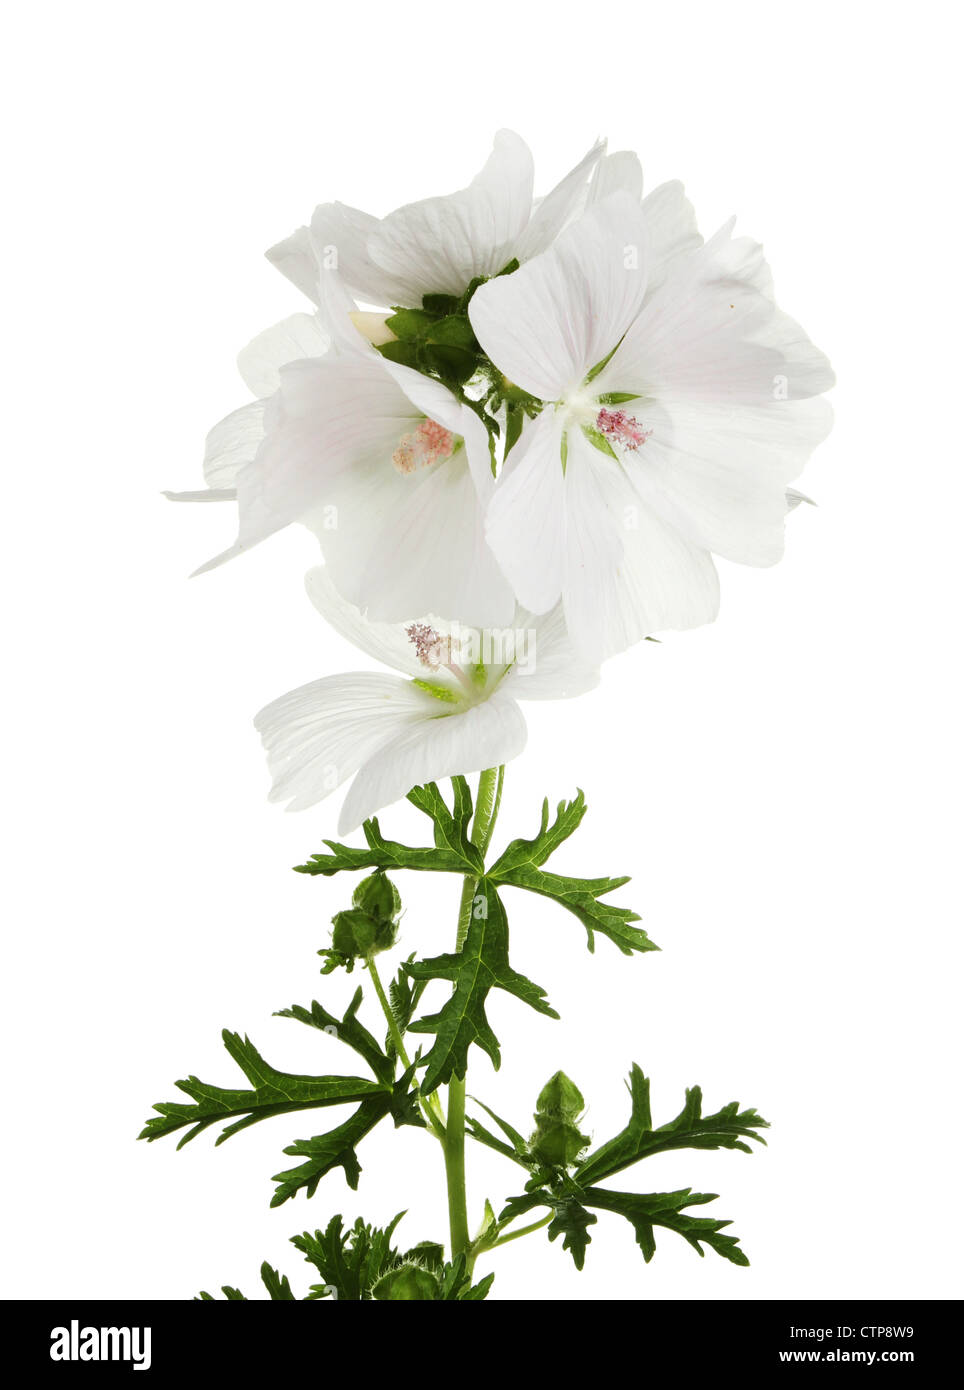 White geranium flower and foliage isolated against white Stock Photo